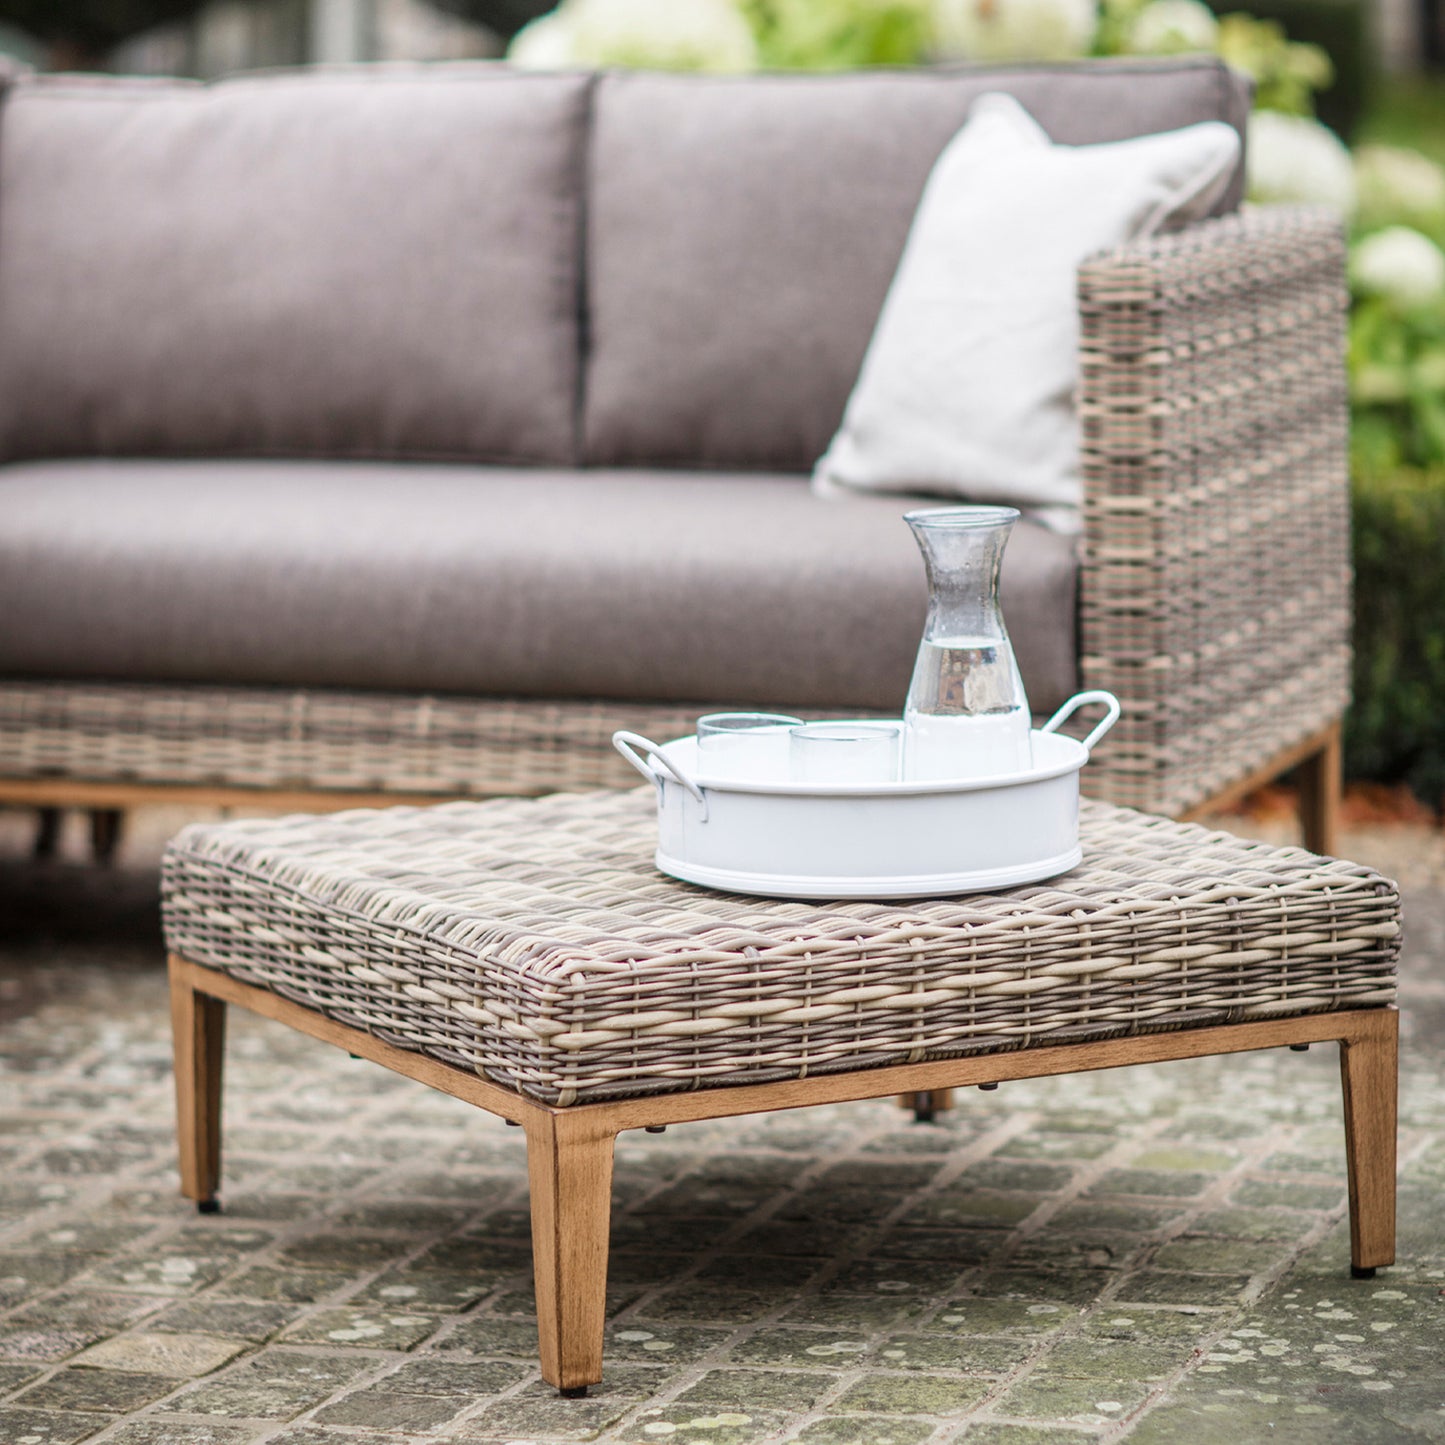 Walderton Outdoor Corner Sofa Set PE Rattan by Garden Trading